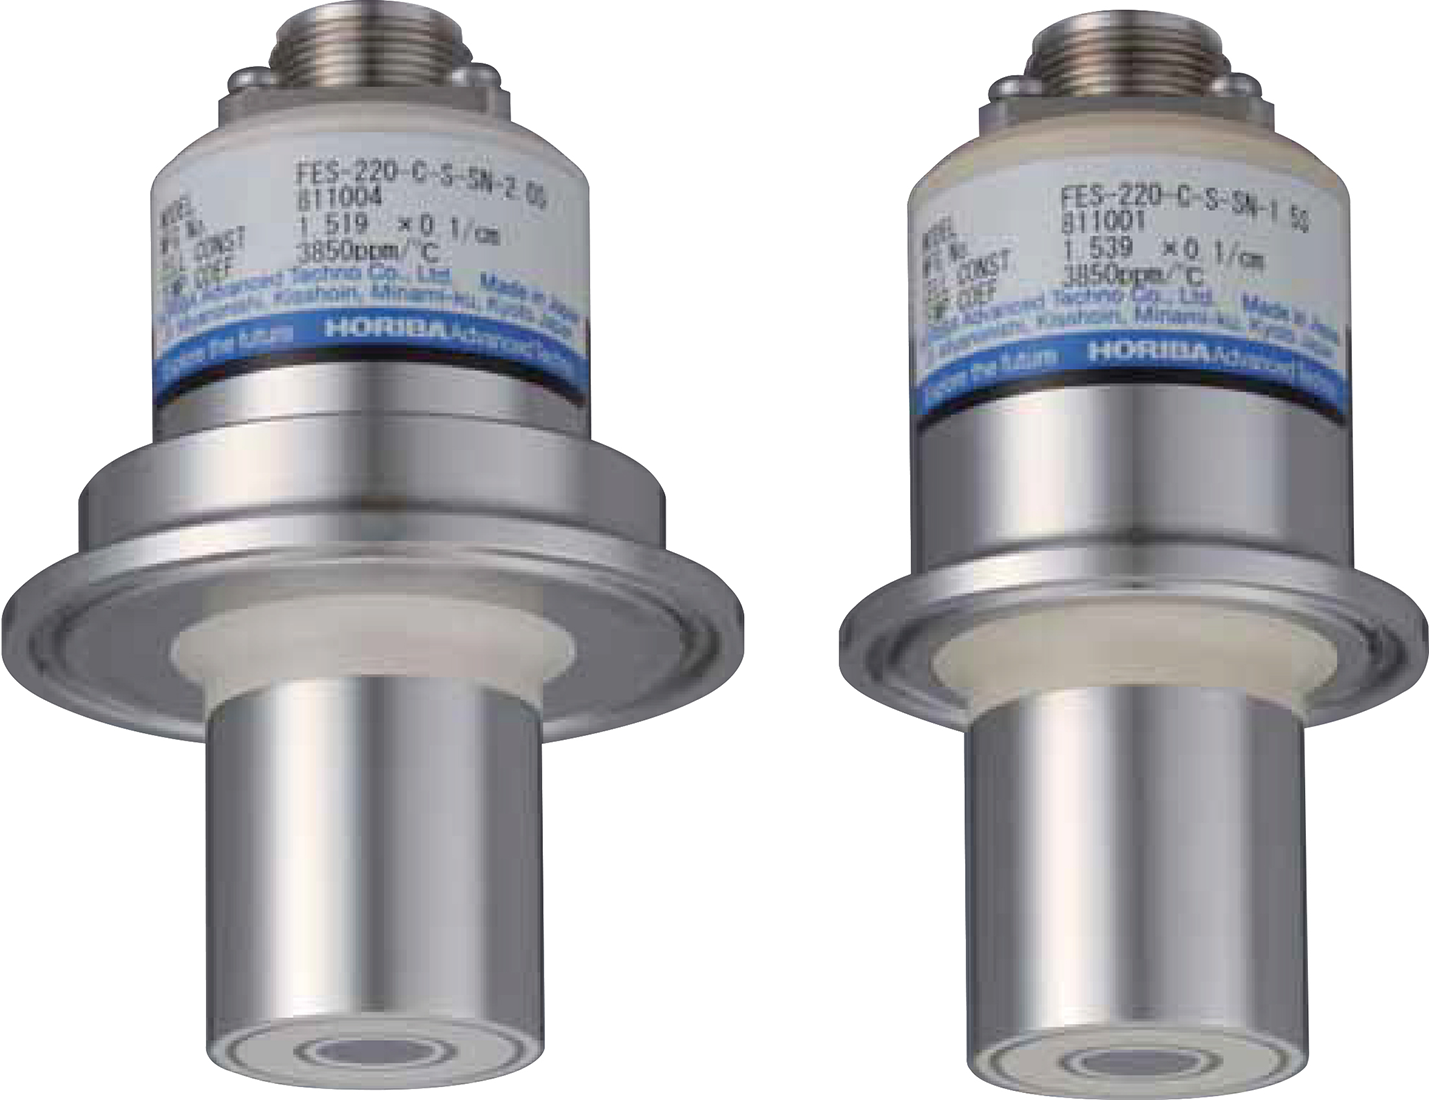 FES-210L Sanitary Conductivity Sensor (Ferrule Clamp type)-02